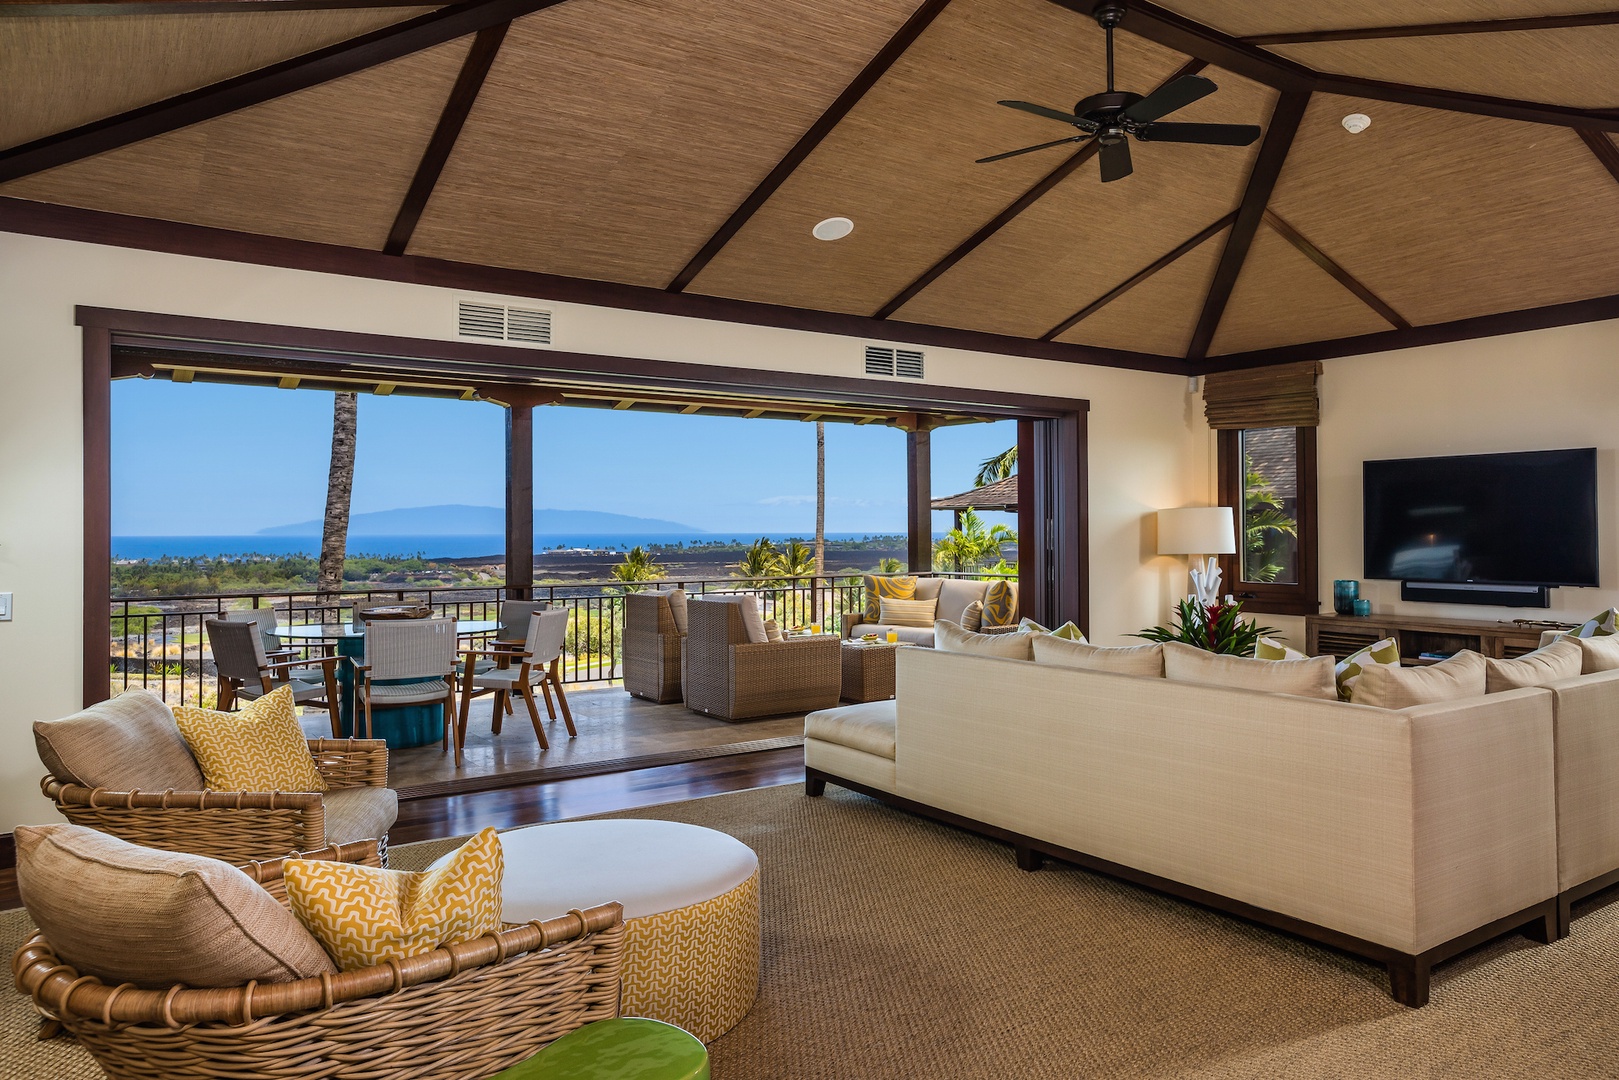 Kailua Kona Vacation Rentals, 2BD Hali'ipua Villa (108) at Four Seasons Resort at Hualalai - Abundant natural light and ocean views in the living area, with sliding glass pocket doors out to the lanai.